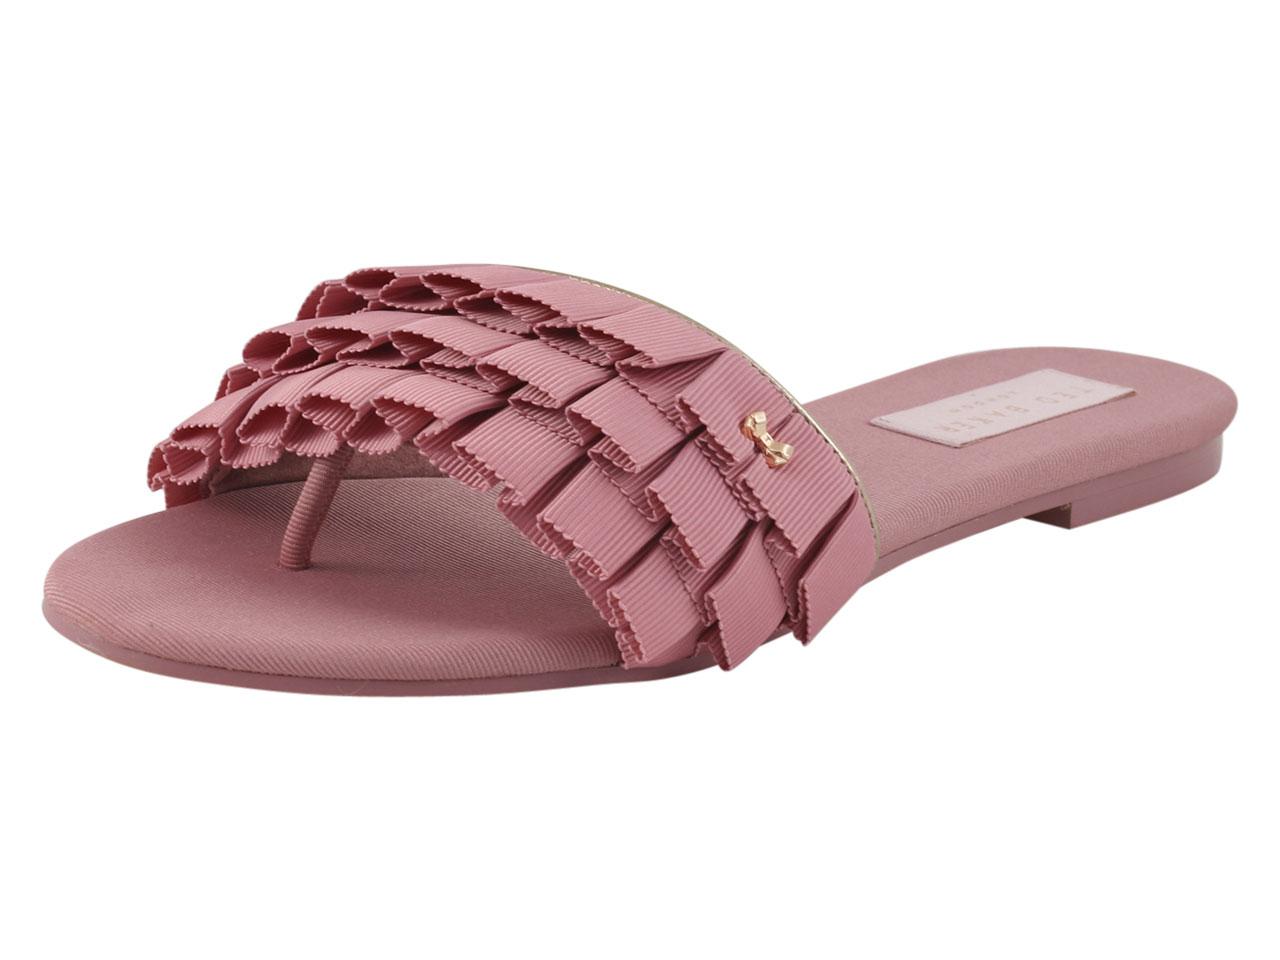 Ted Baker Women's Towdi Slide Sandals Shoes - Pink - 9 B(M) US